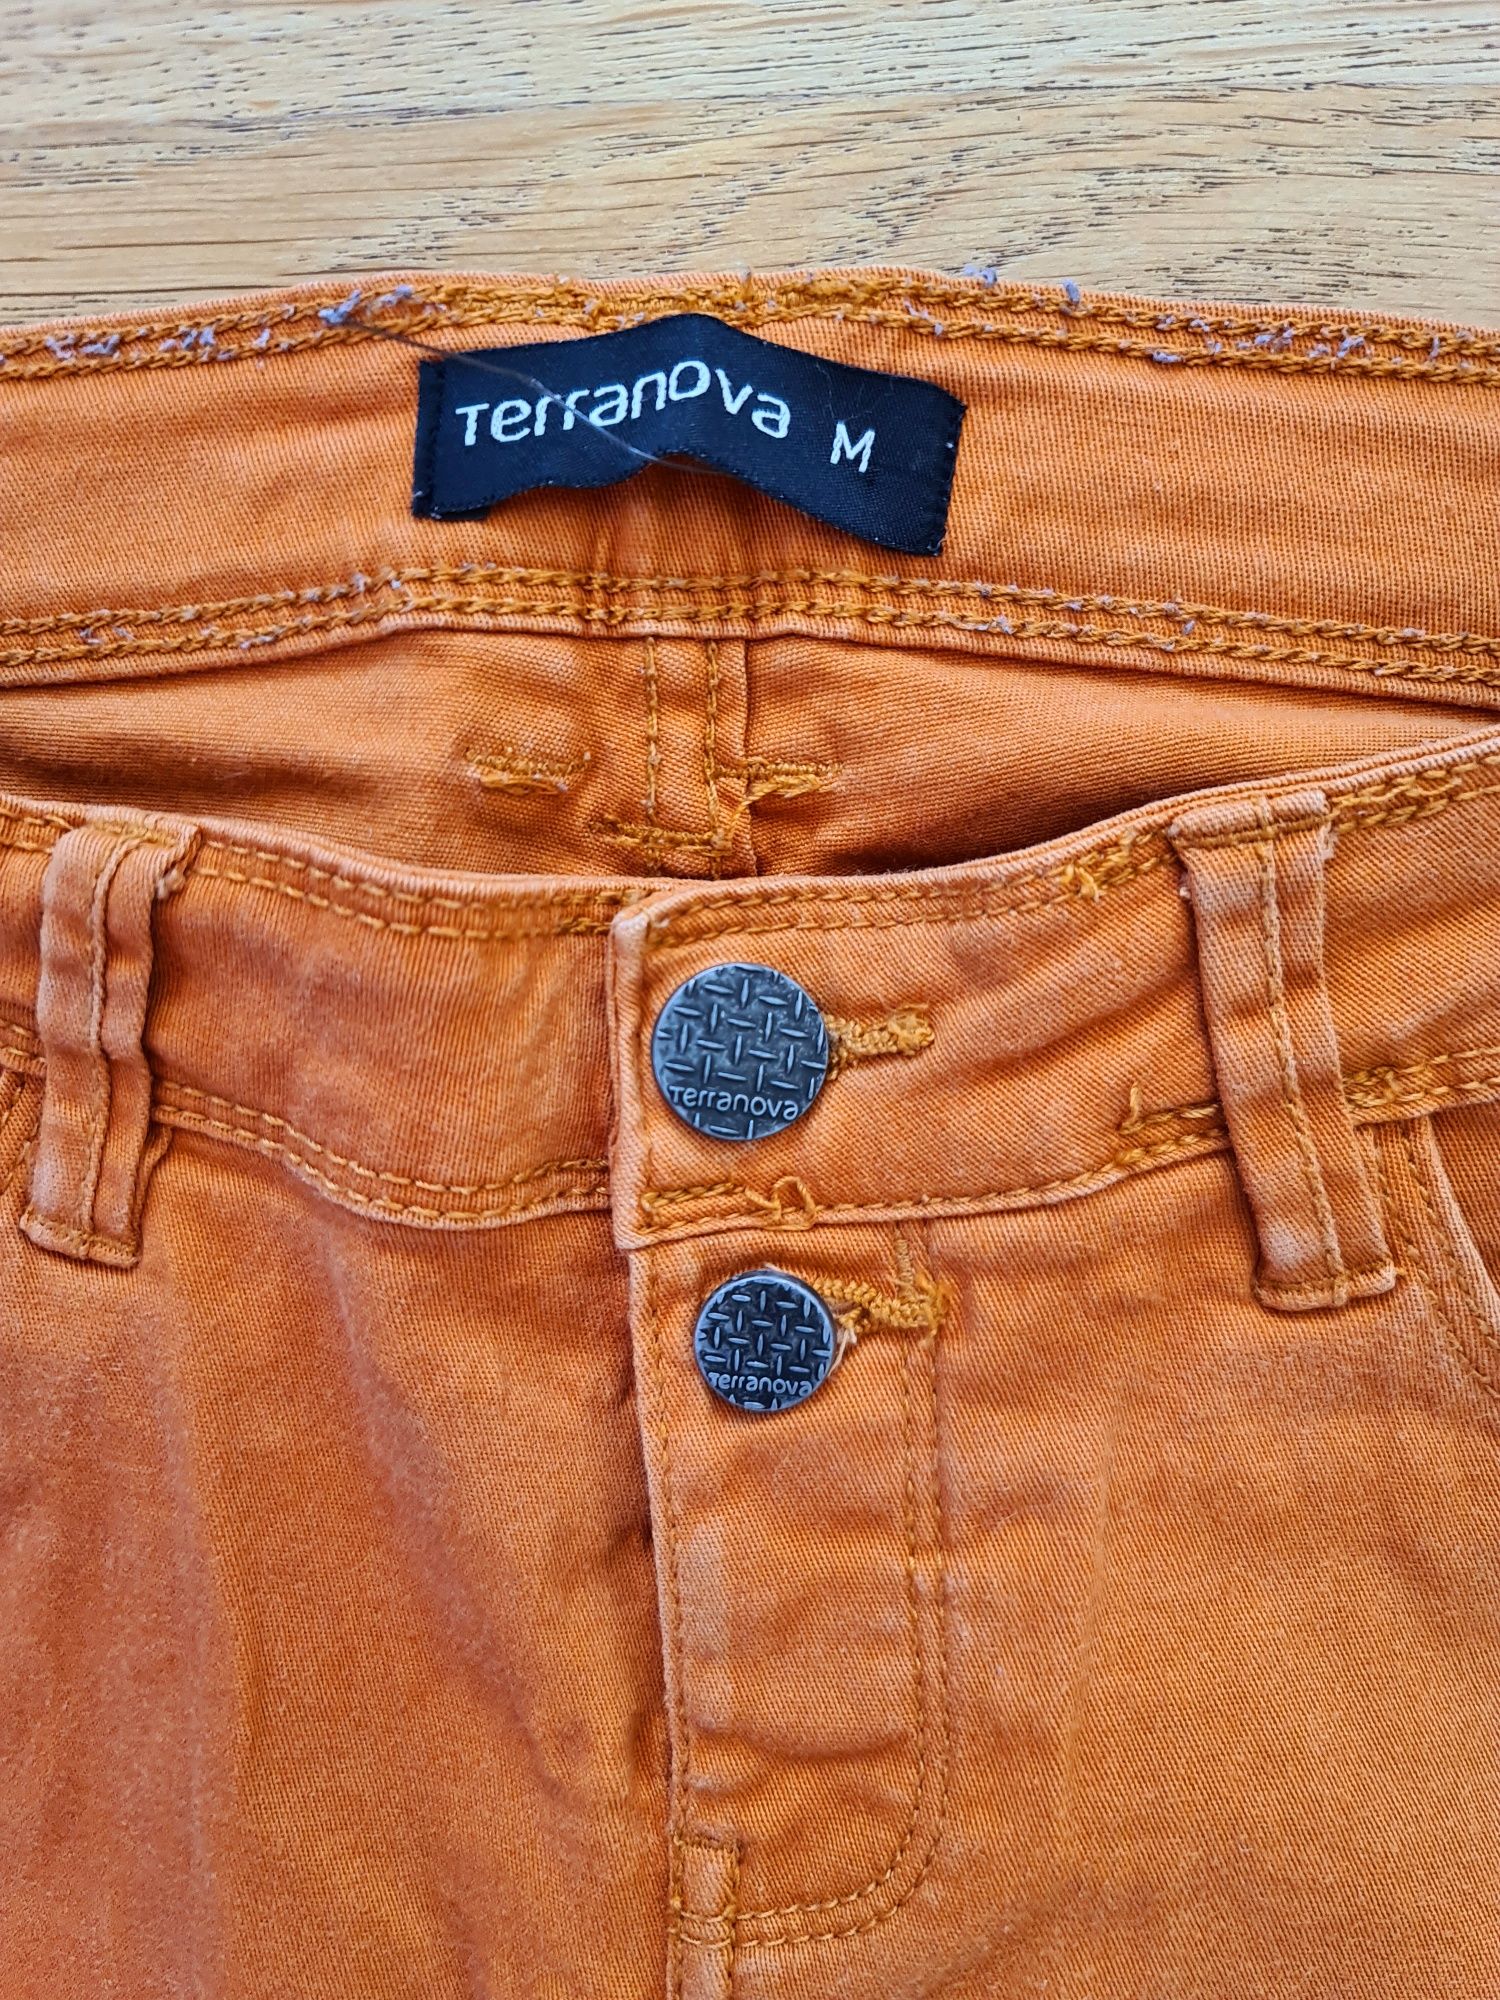 Terranvova M, spodnie rurki strechowe